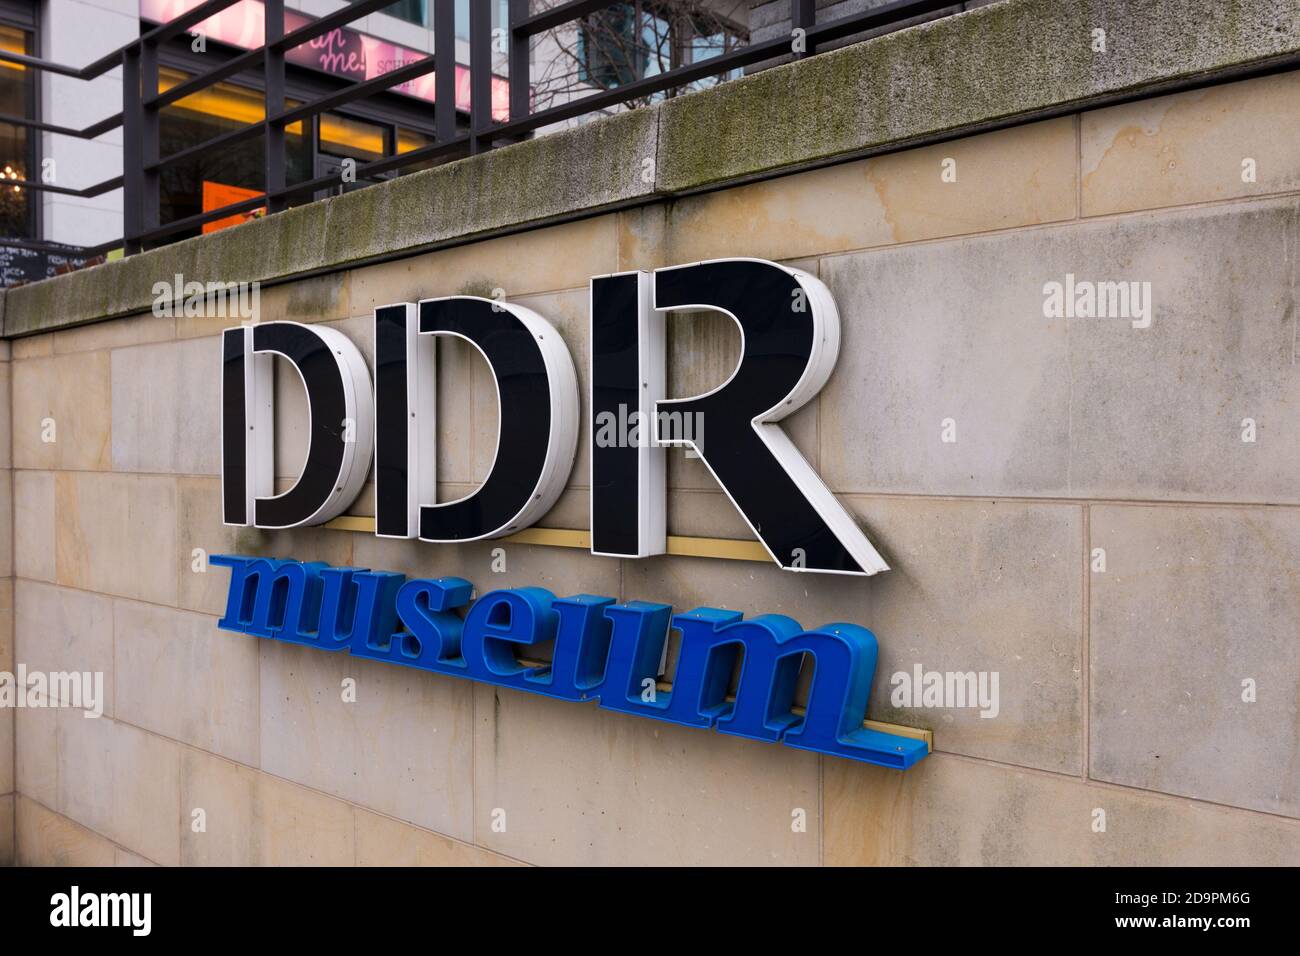 Berlin / Deutschland - 12. Februar 2017: DDR Museum, Ostdeutsches Museum im Zentrum von Berlin, Deutschland Stockfoto